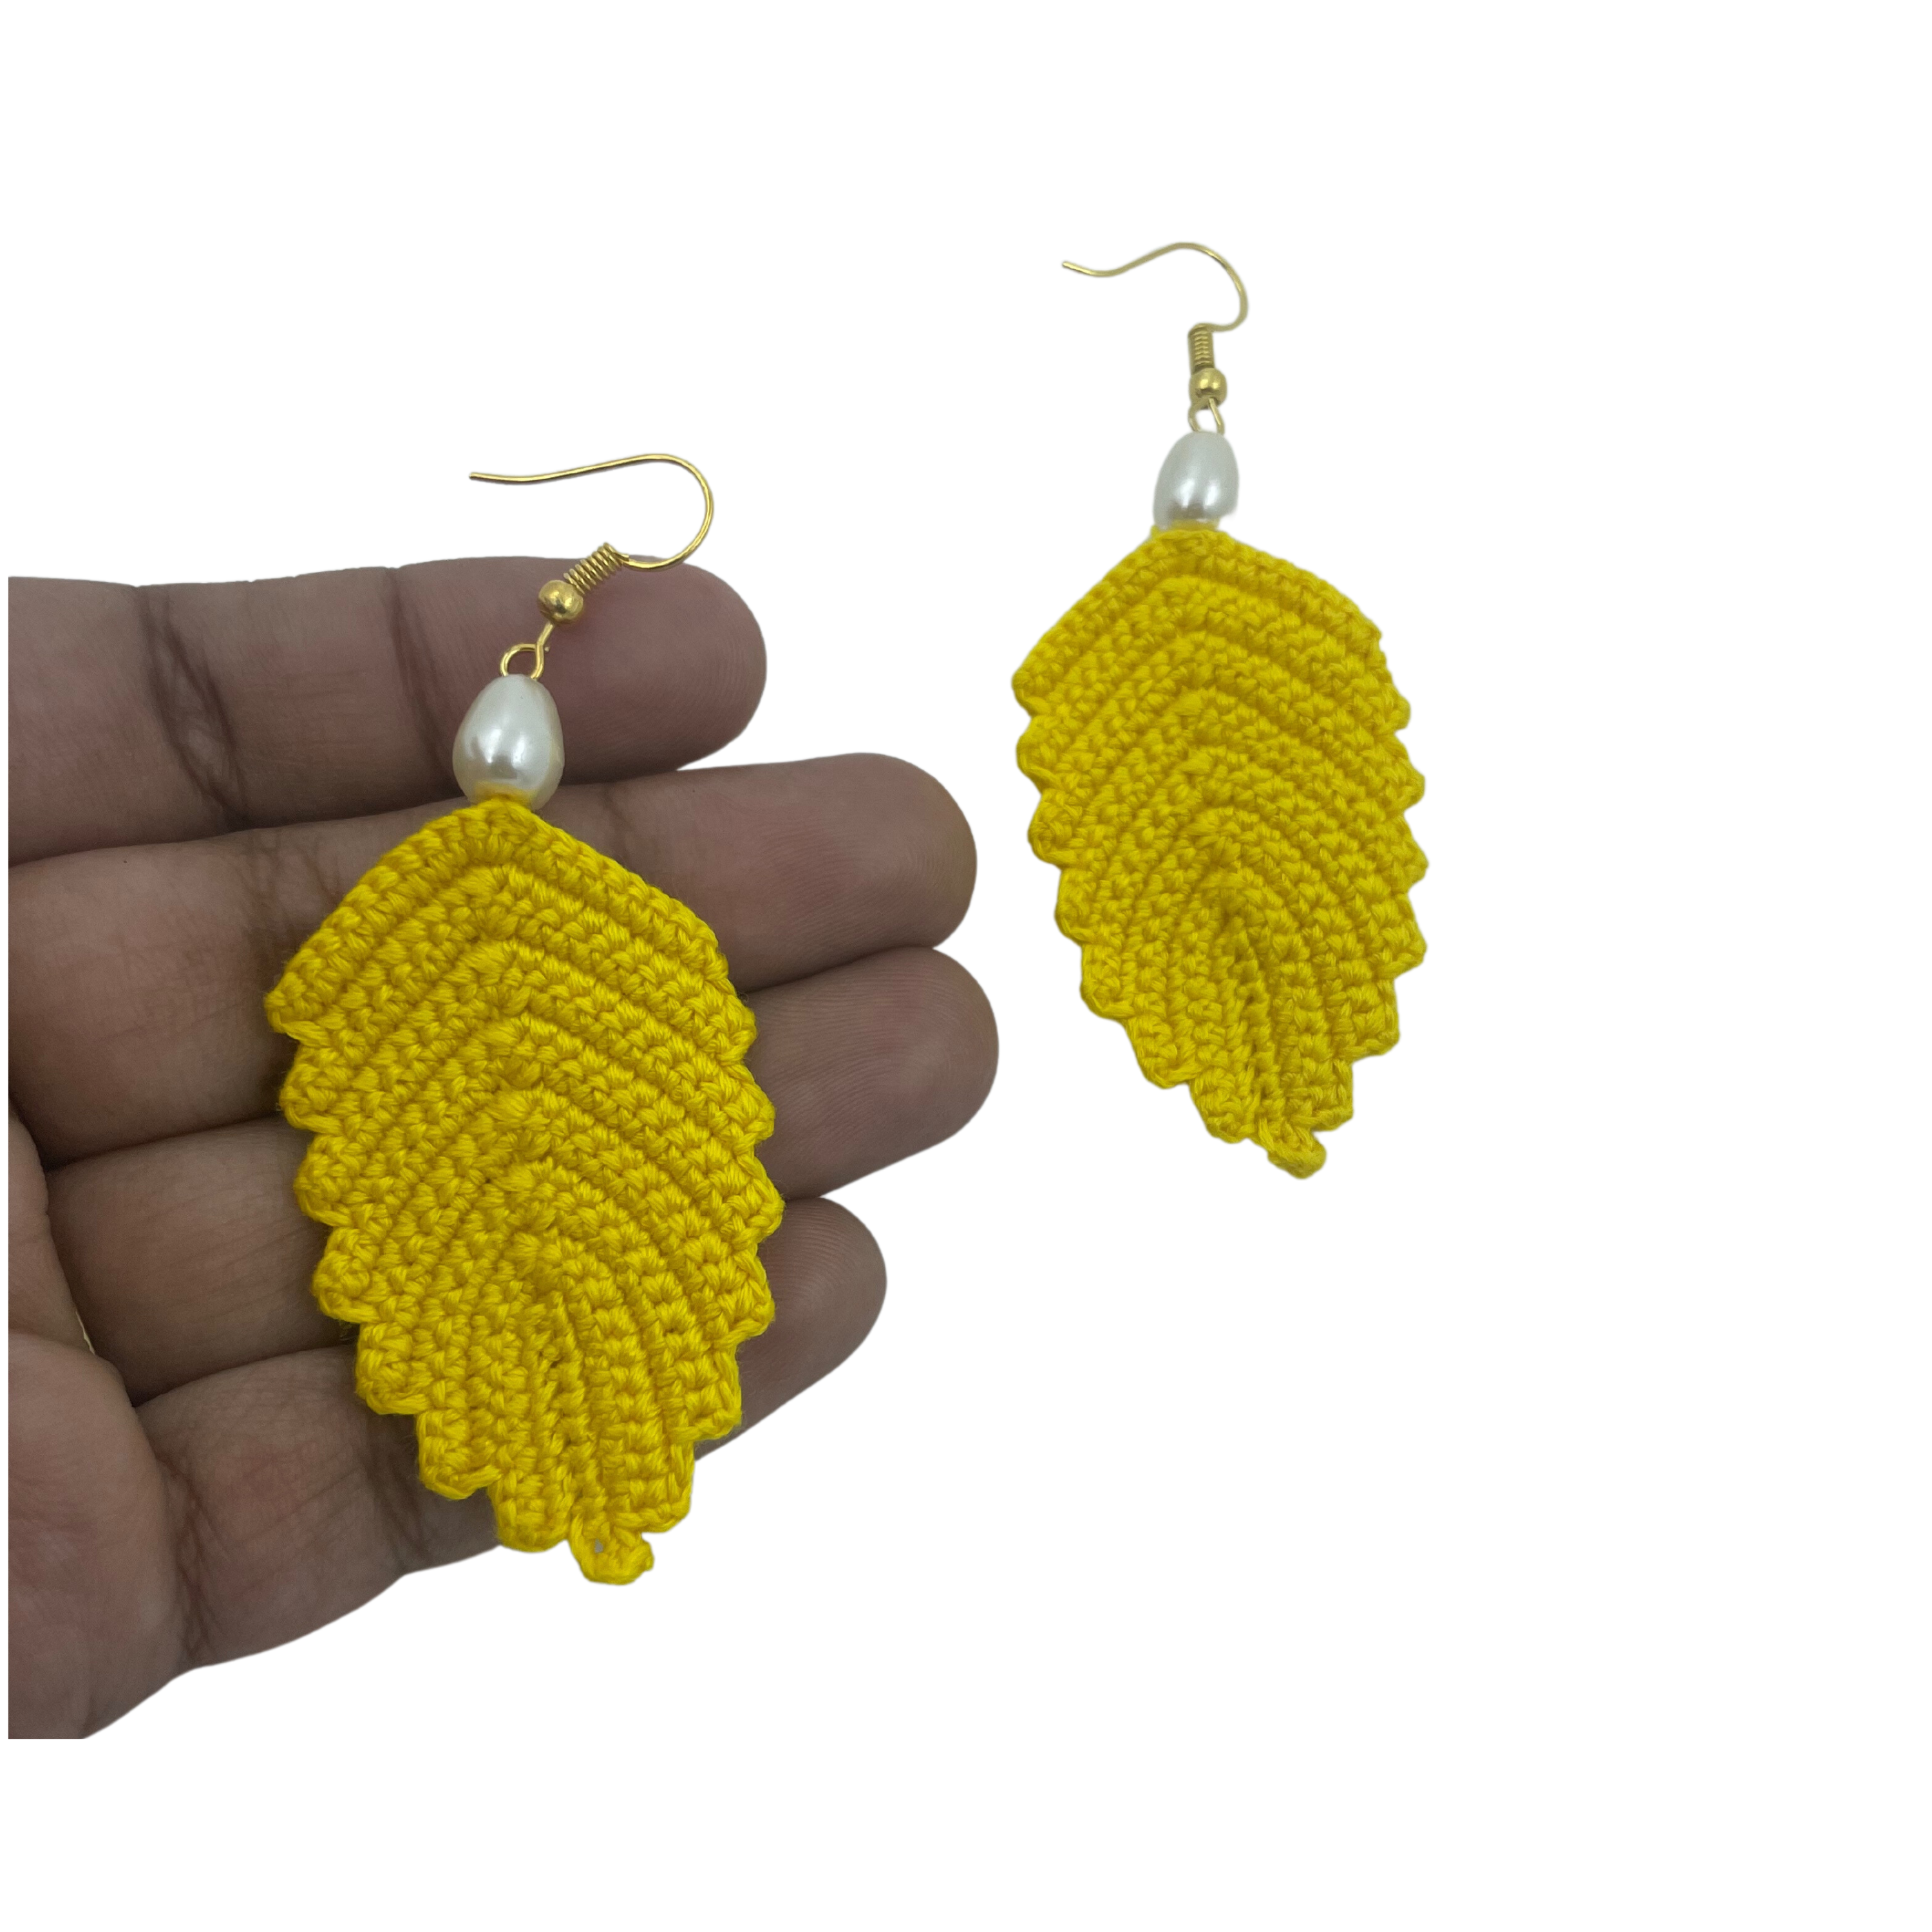 Flower pattern Crochet Earrings, Size: Medium at Rs 60/piece in Mumbai |  ID: 23547722312